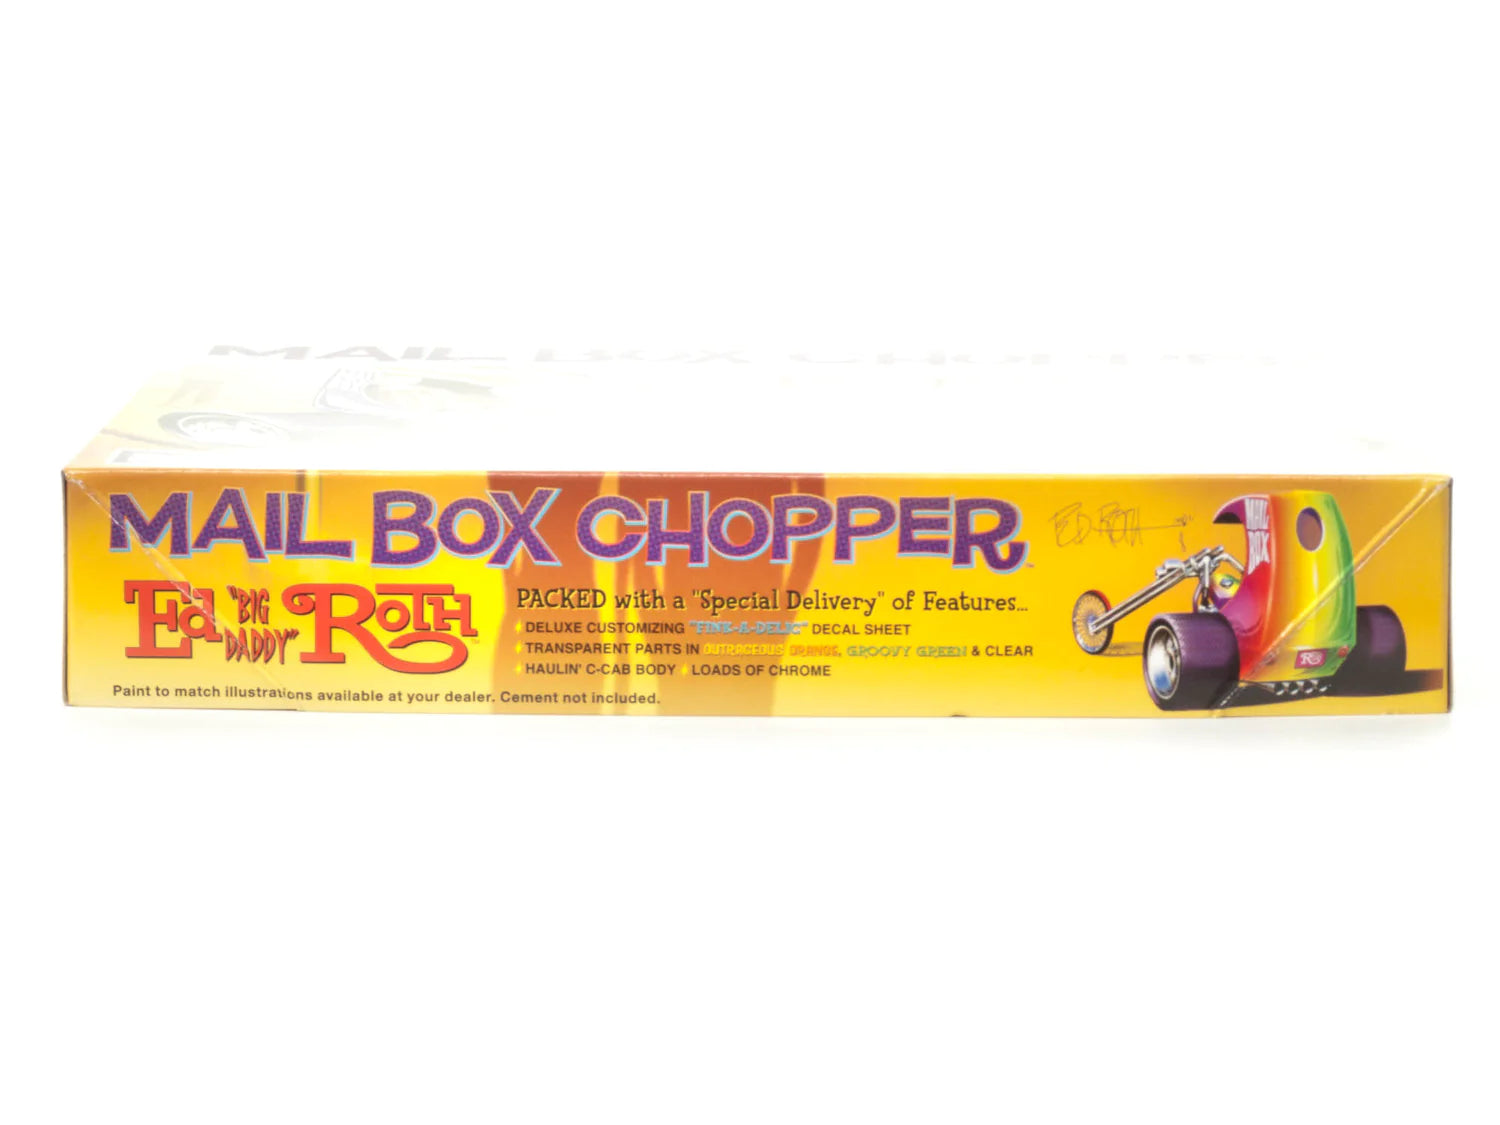 MPC892 - 1:25 Ed Roth's Mail Box Clipper (Trick Trikes Series)